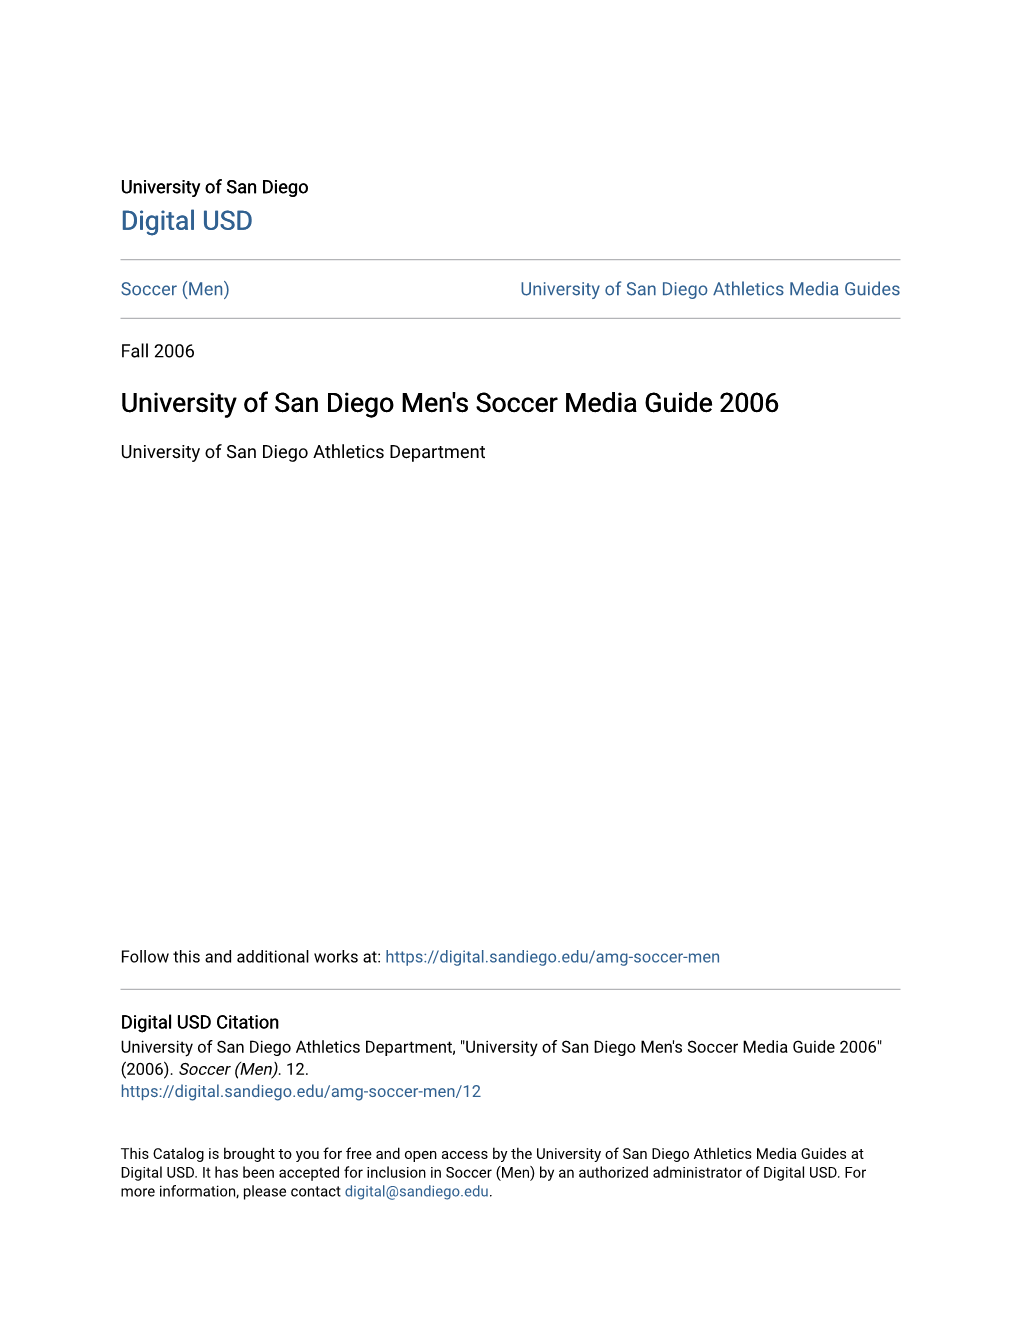 University of San Diego Men's Soccer Media Guide 2006